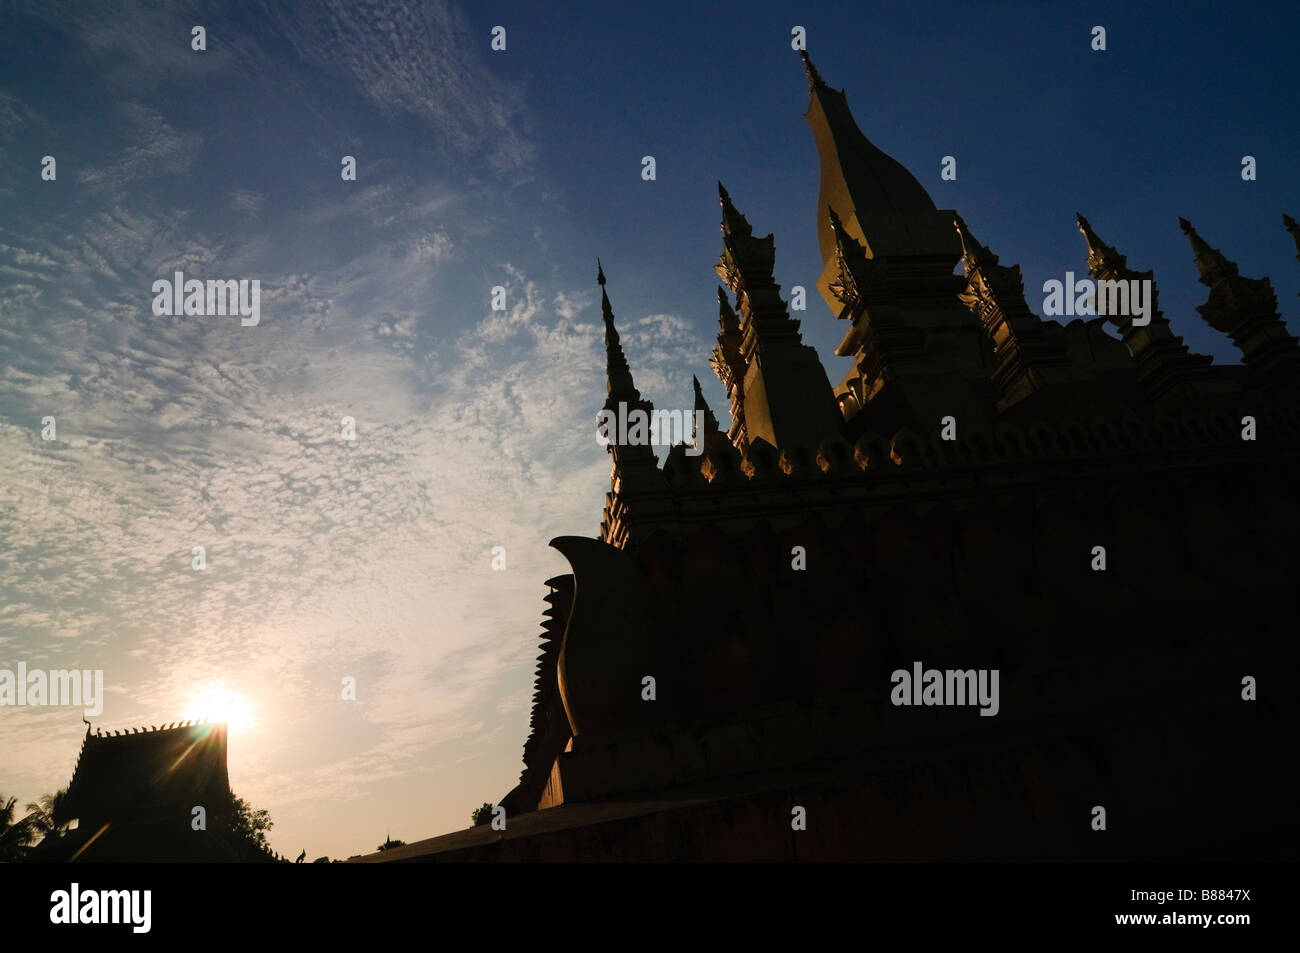 Pha That Luang Temple, Vientiane. Laos Stock Photo